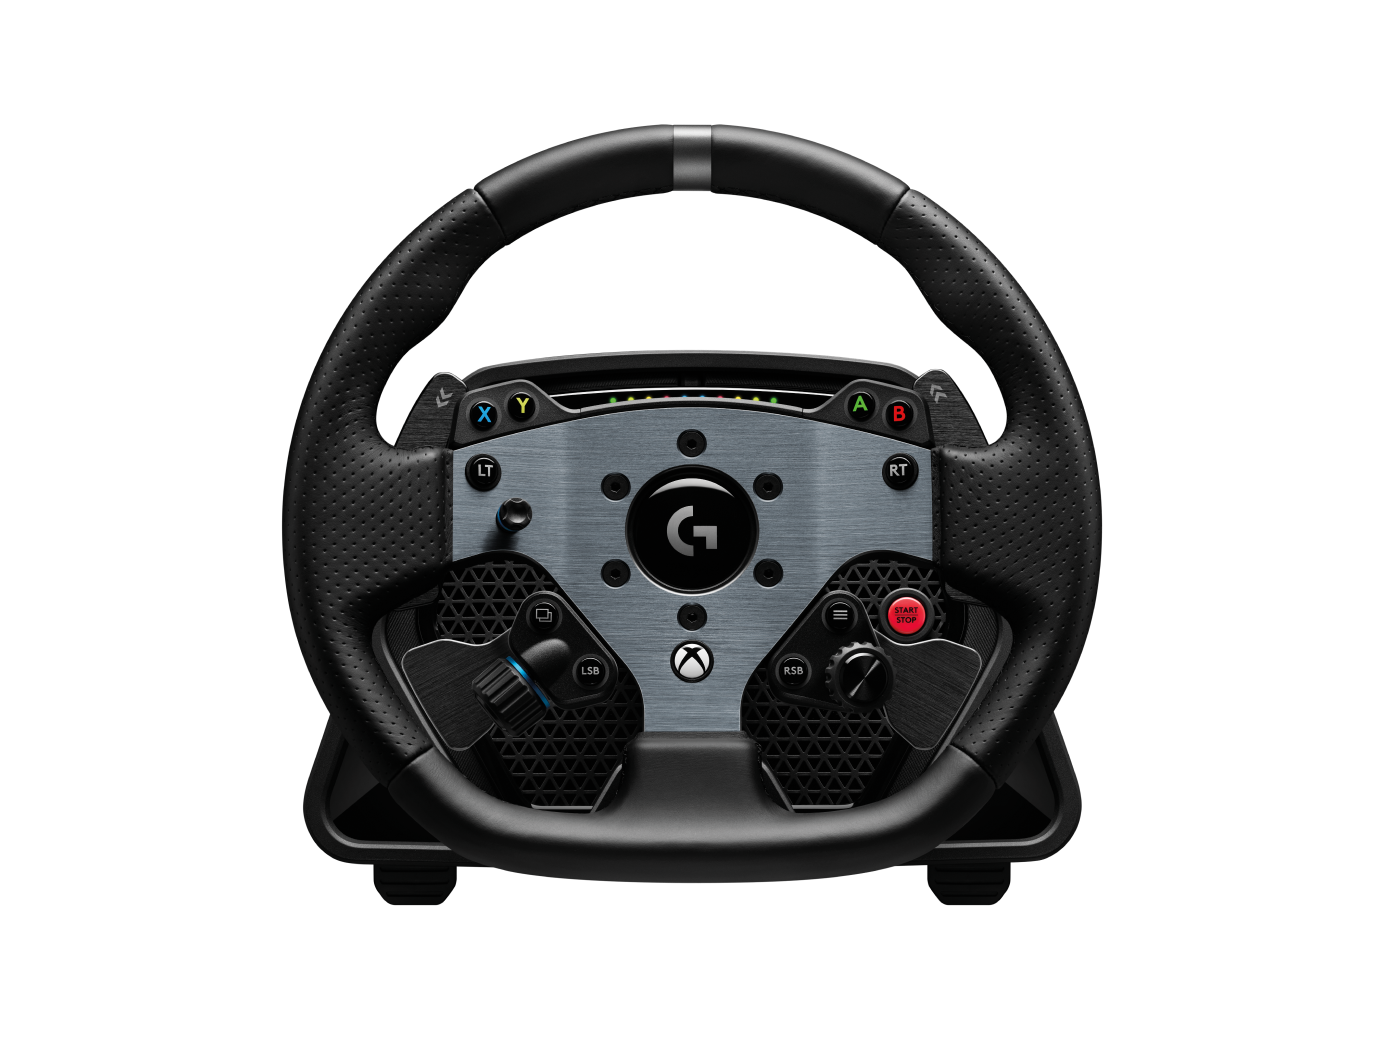 Nietje accu zonlicht PRO Racing Wheel for Playstation, Xbox, PC | Logitech G